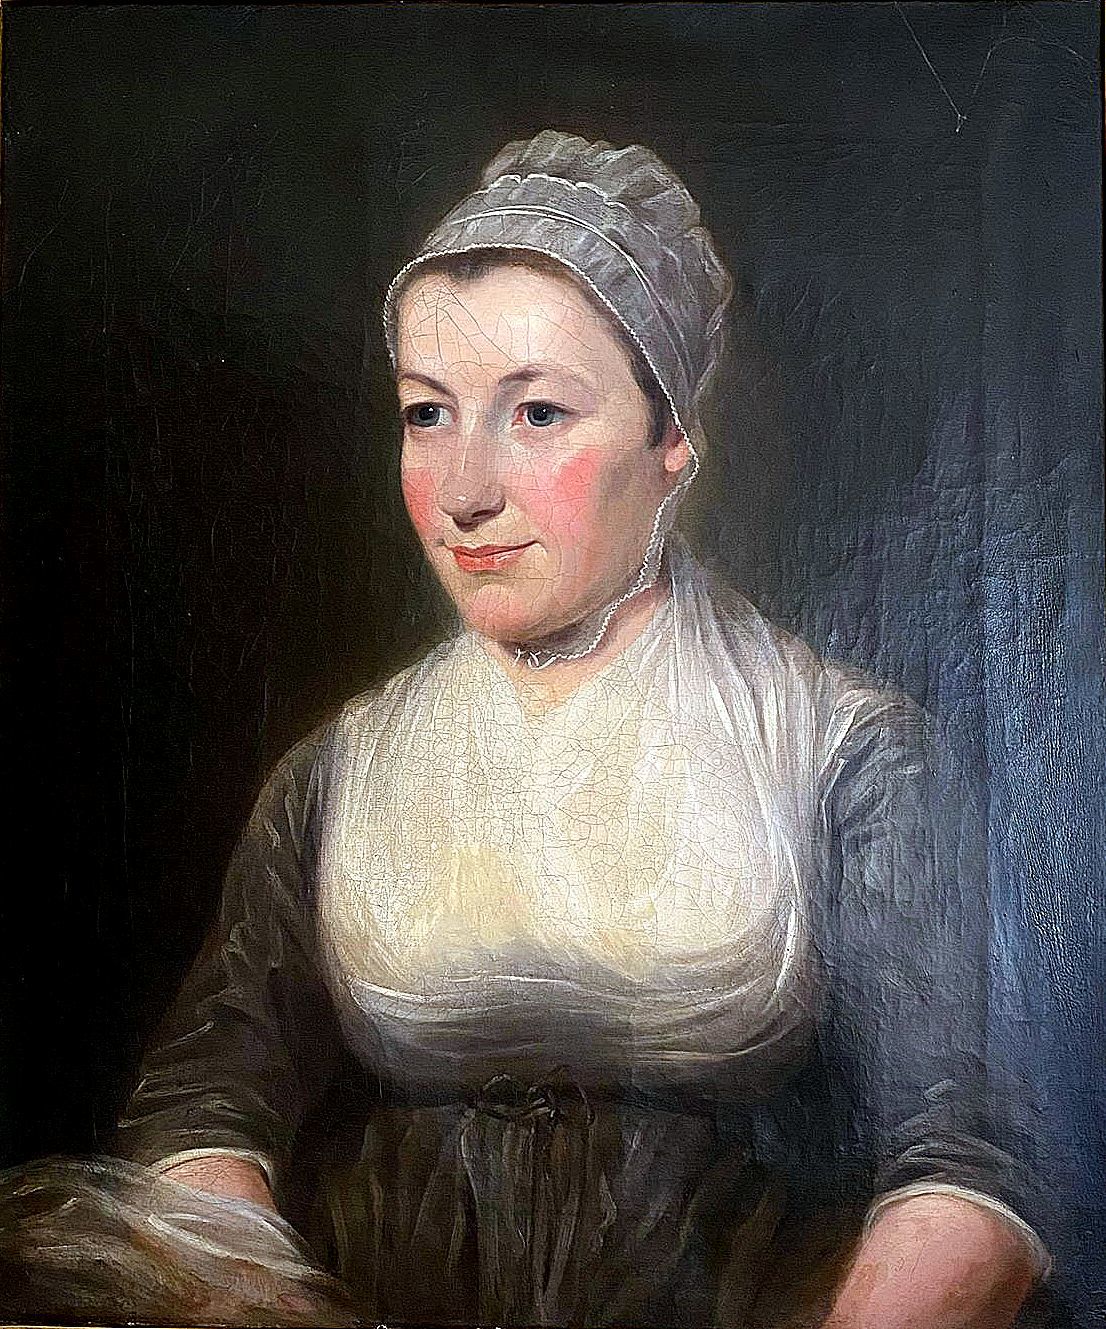 Painting of a Quaker woman named Sarah, possibly Sarah ‘Sally’ Weston